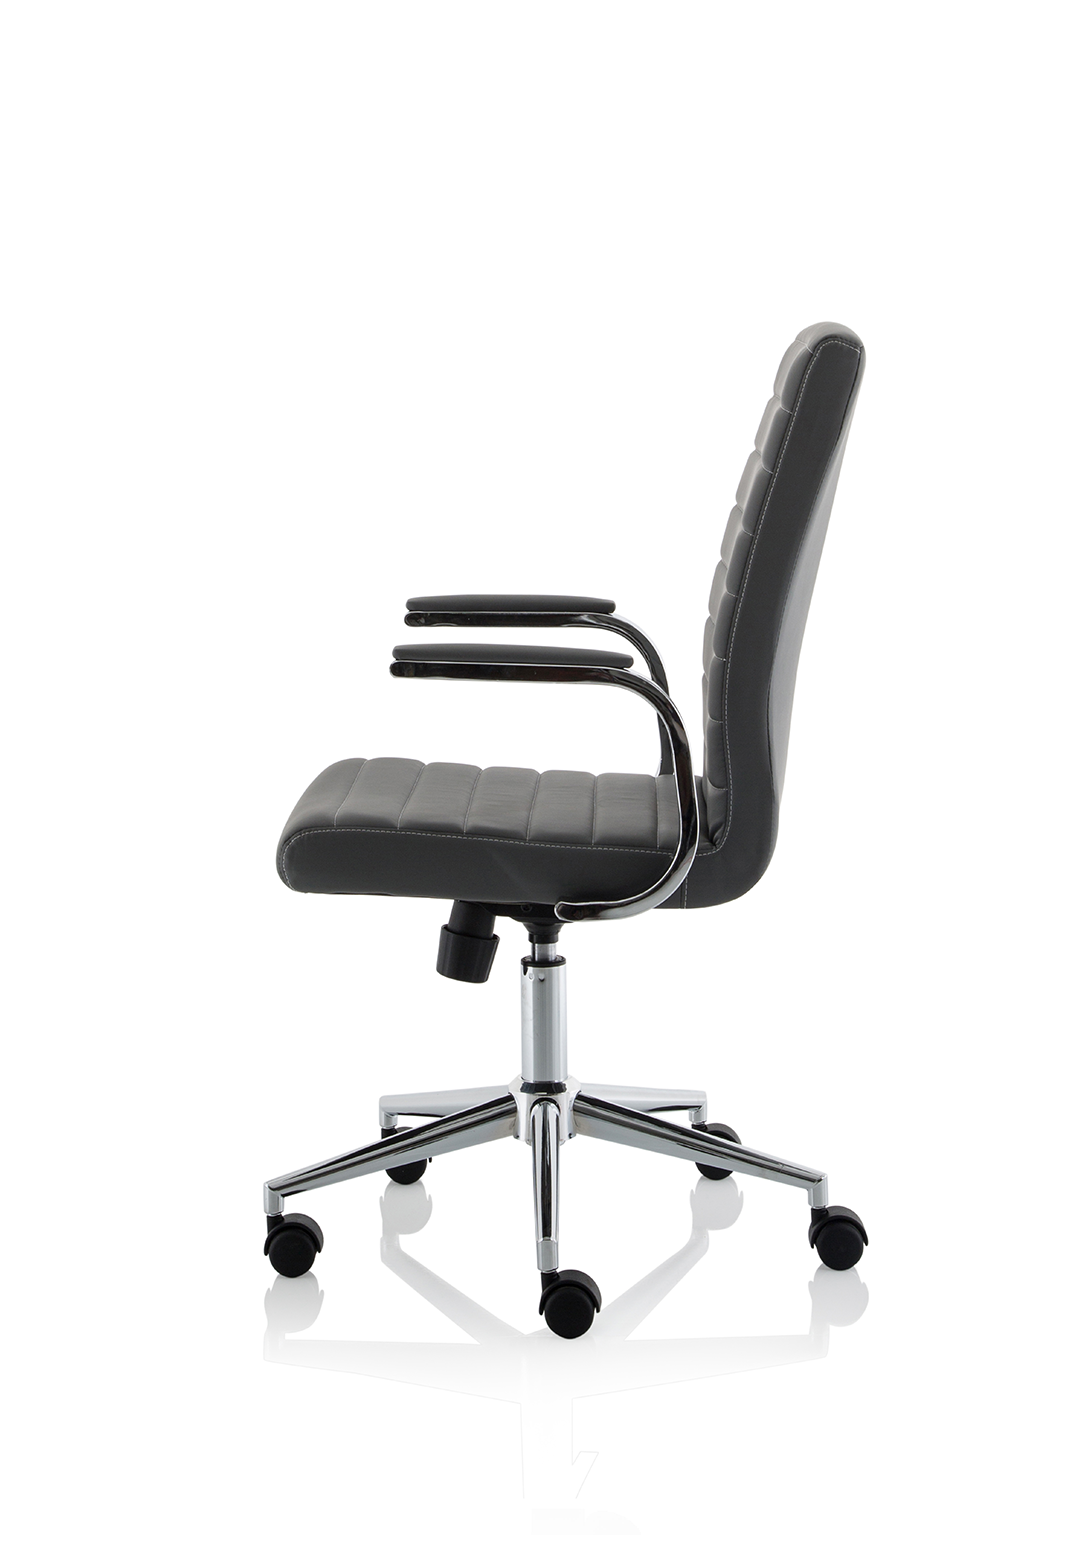 Ezra Medium Back Leather Executive Office Chair with Arms